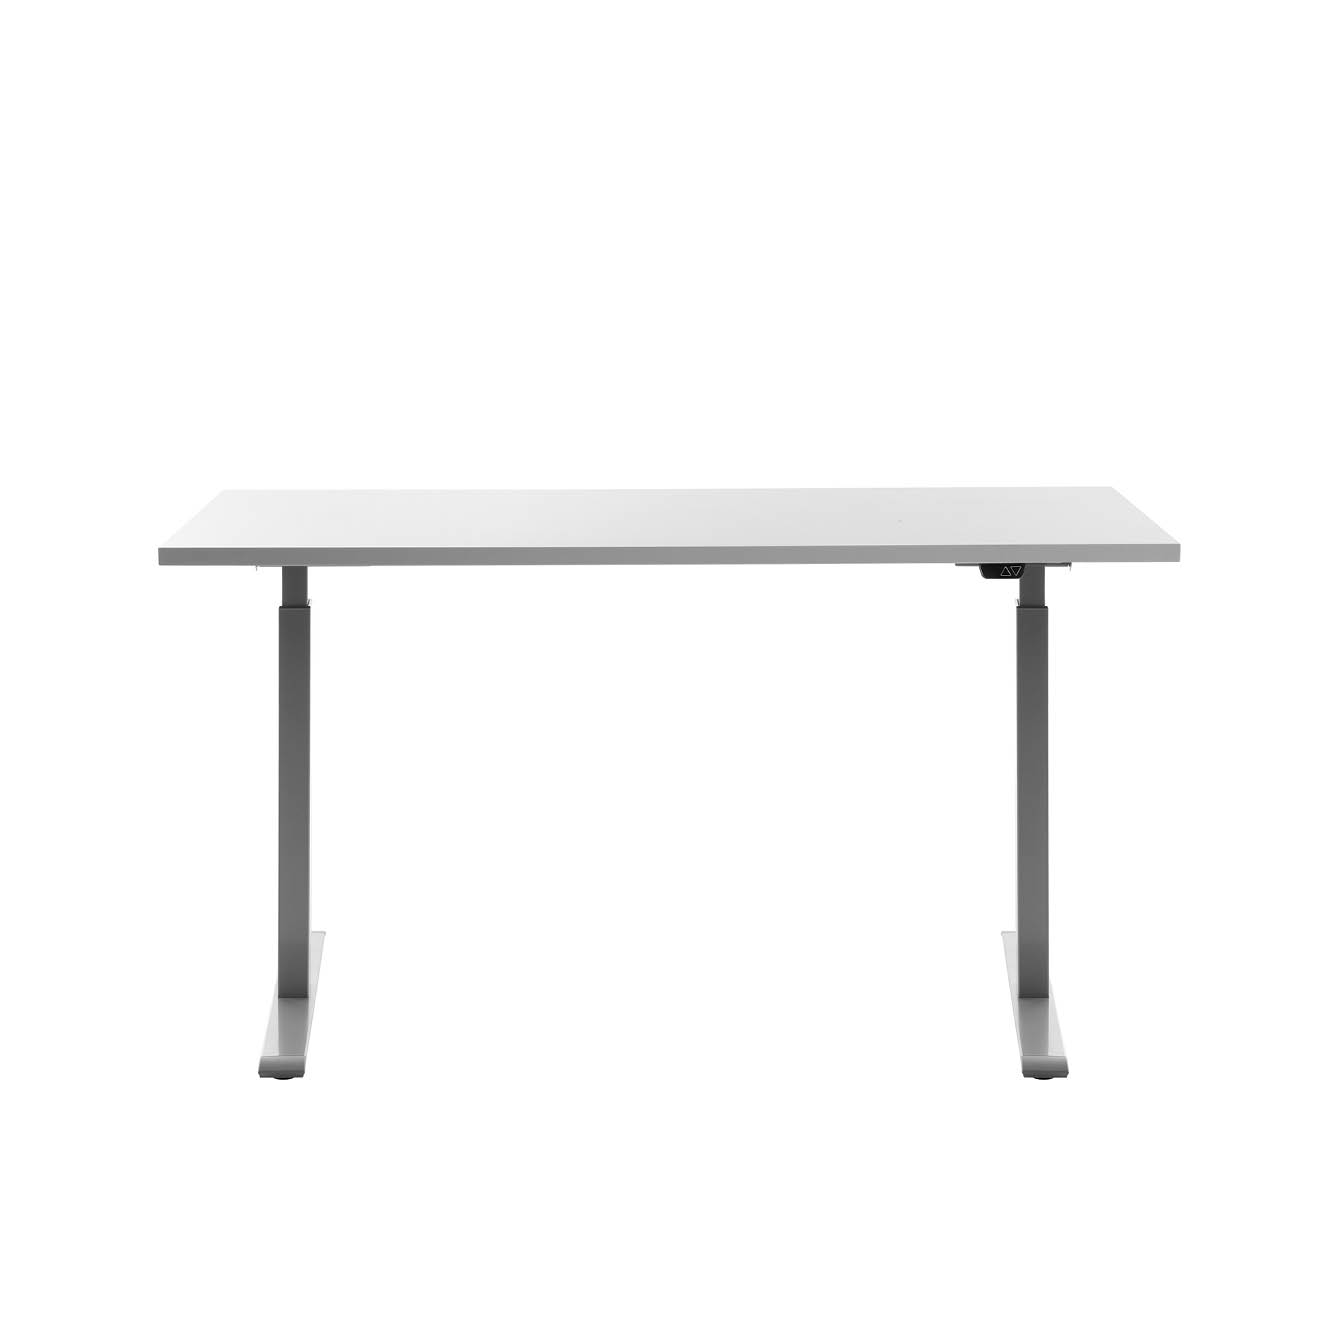 140 x 60 cm Schreibtisch Topstar Ergo E-Table höhenverstellbar - grau, weiss